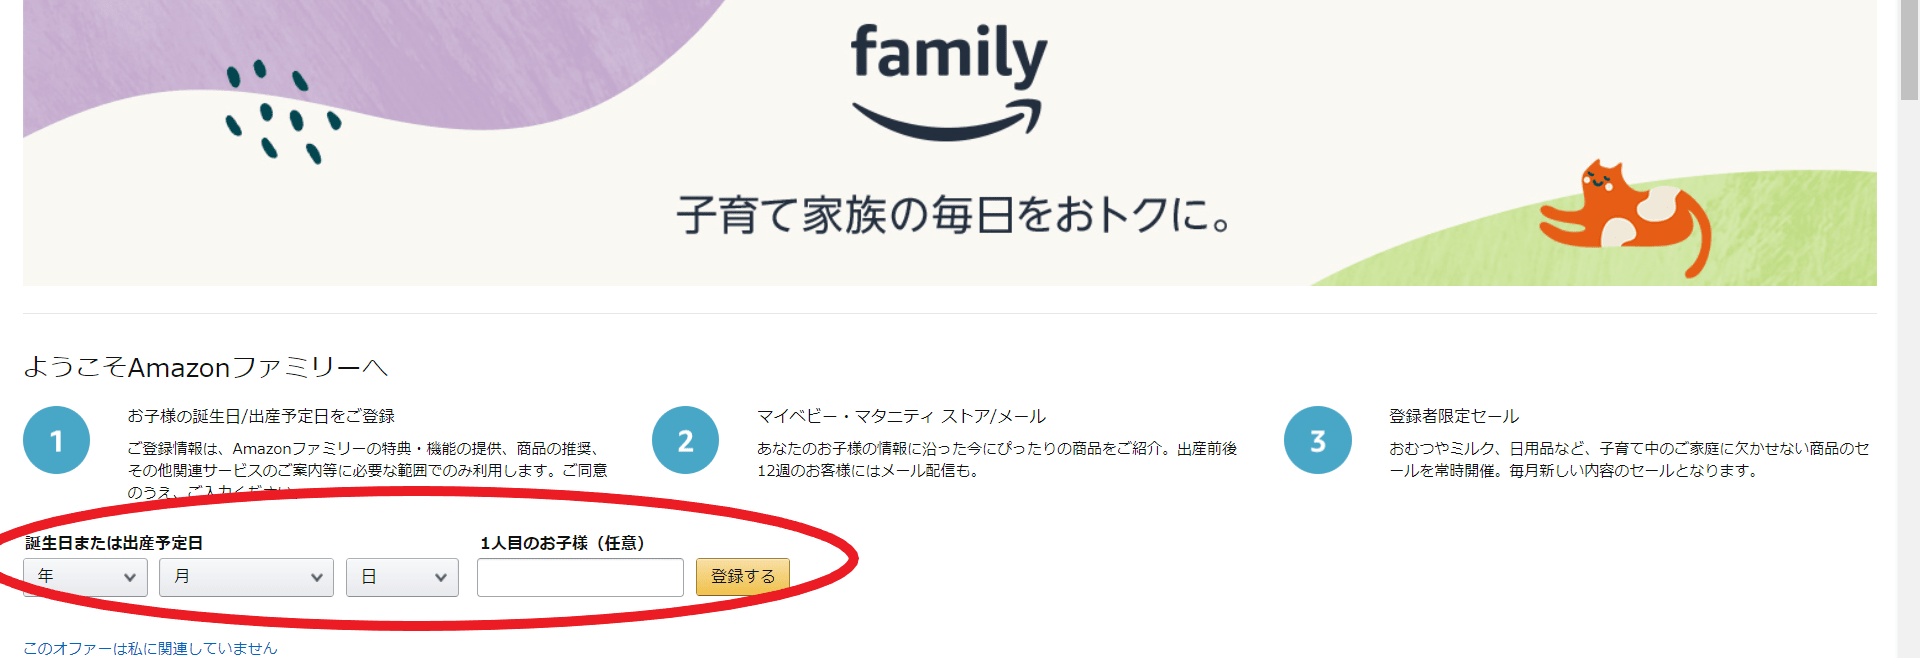 Amazonファミリー登録方法の画像。